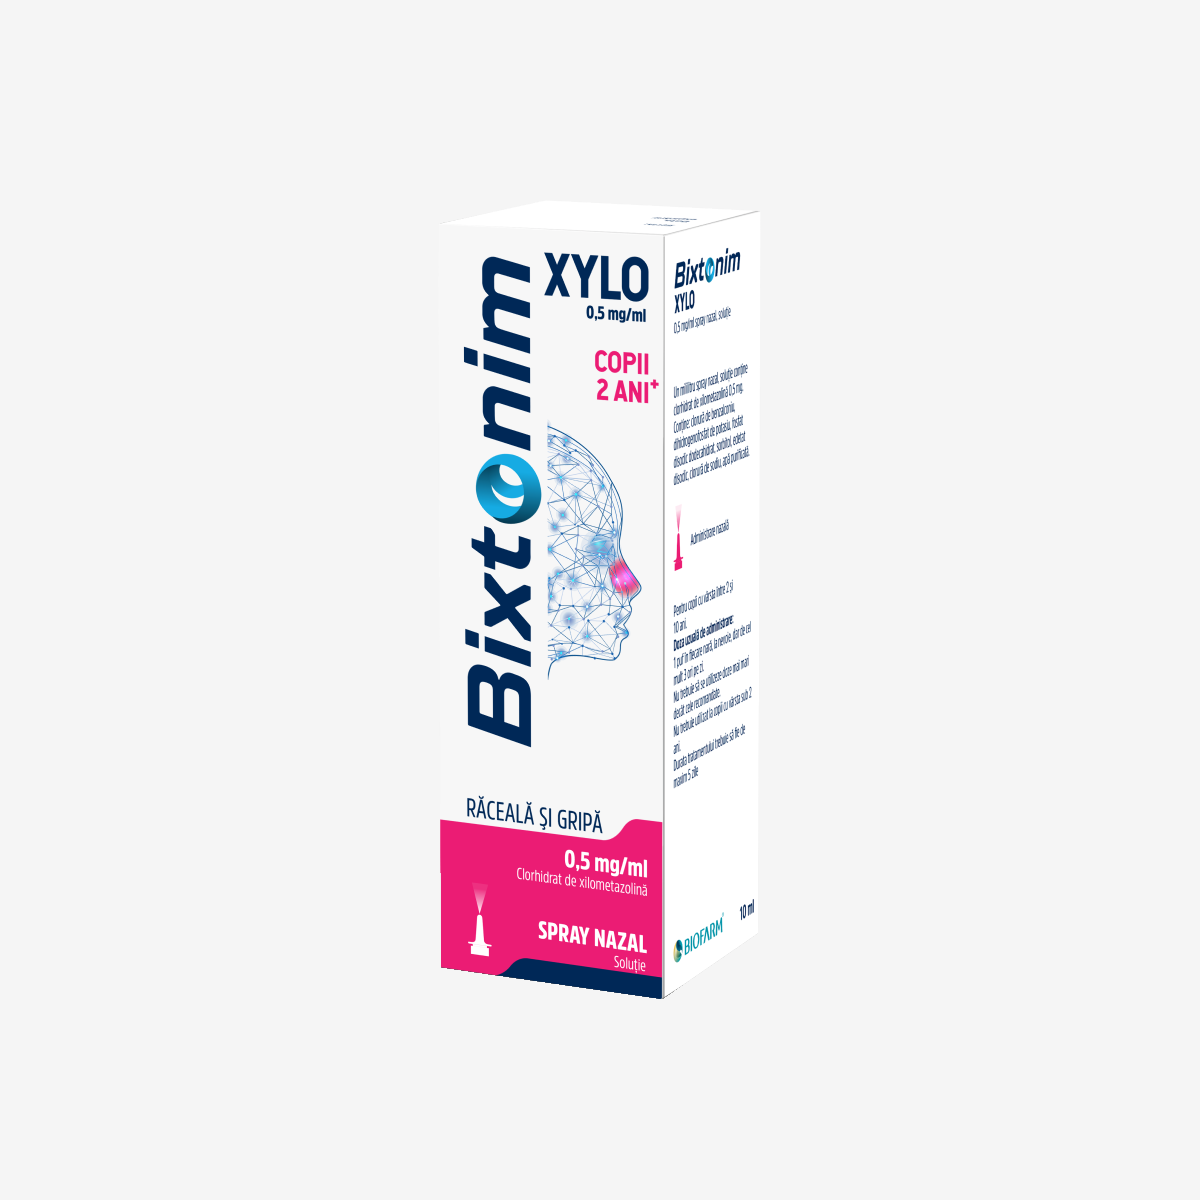 Bixtonim Xylo Spray Nazal Copii, 10 ml, Biofarm